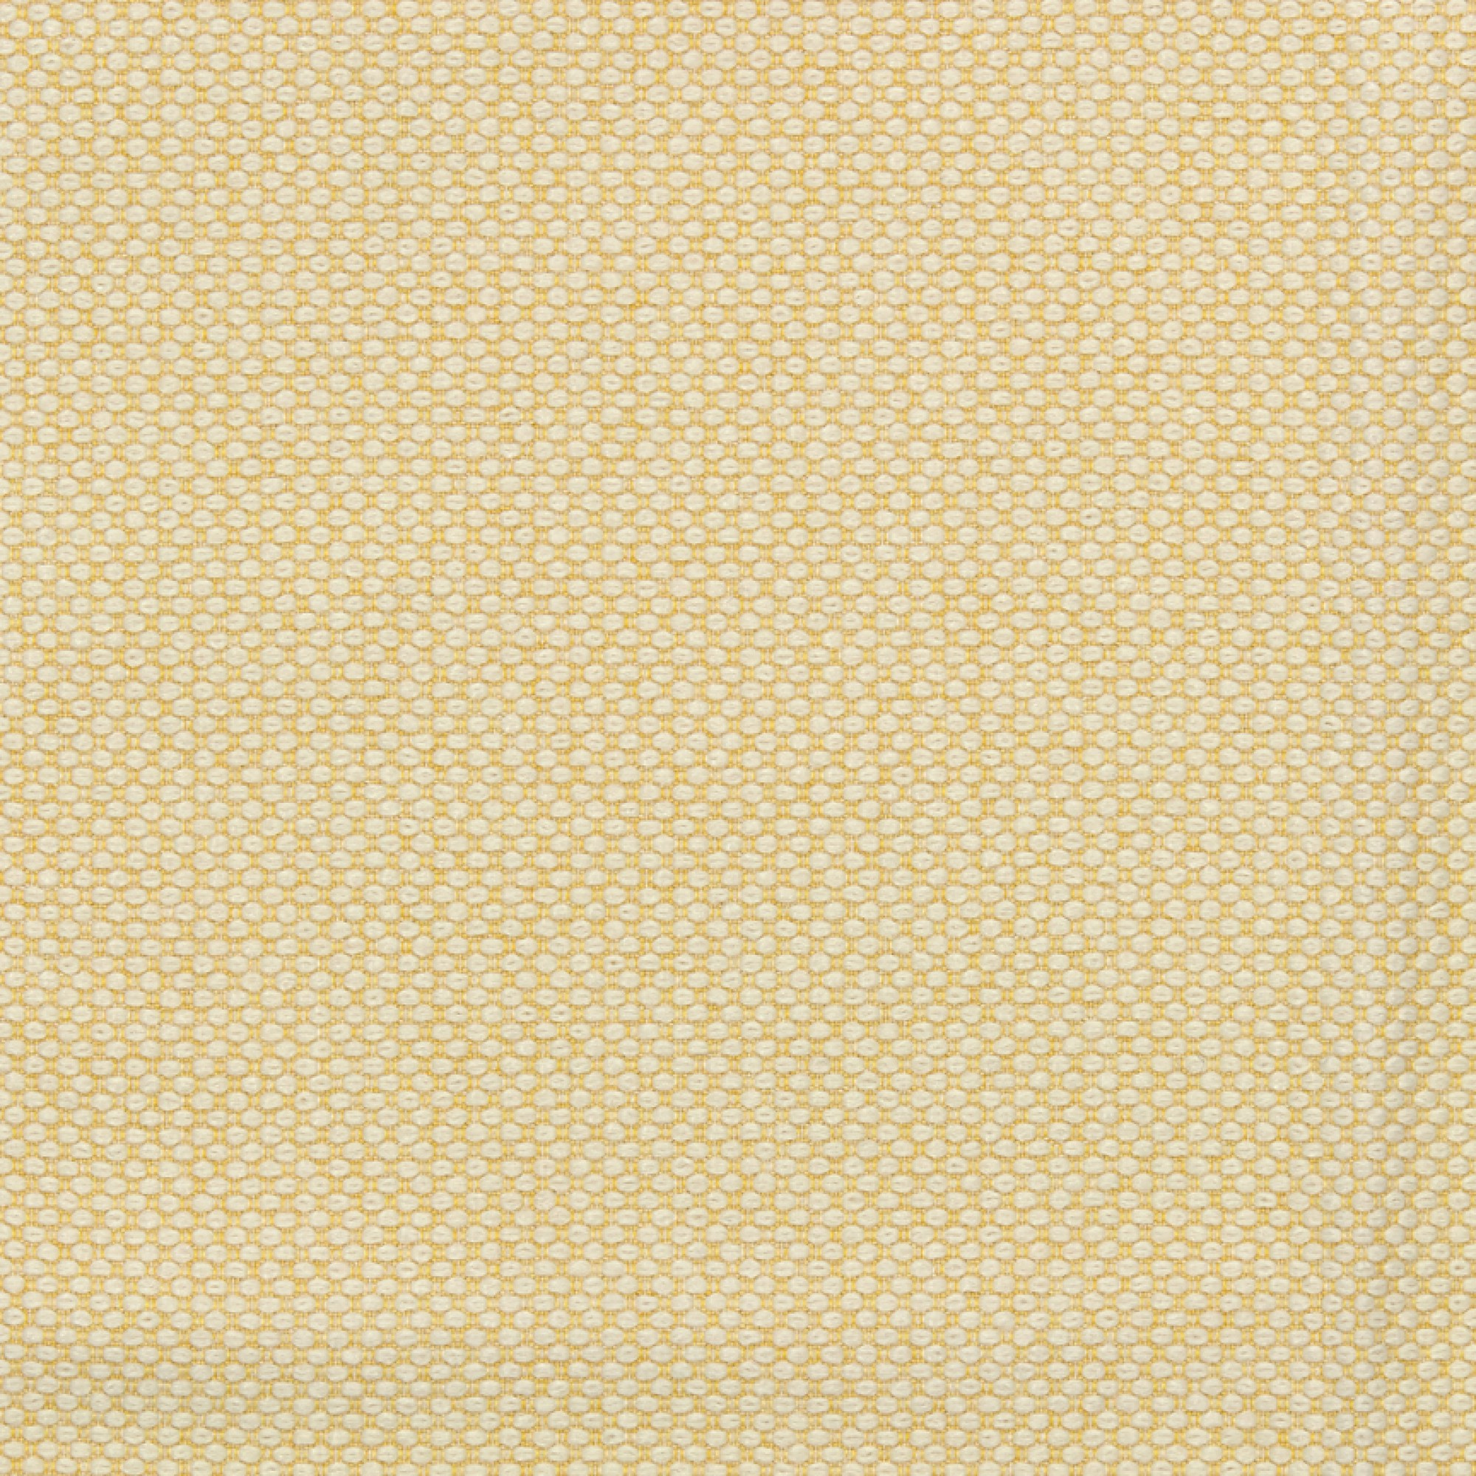 Fabric sample Merit 0024 yellow